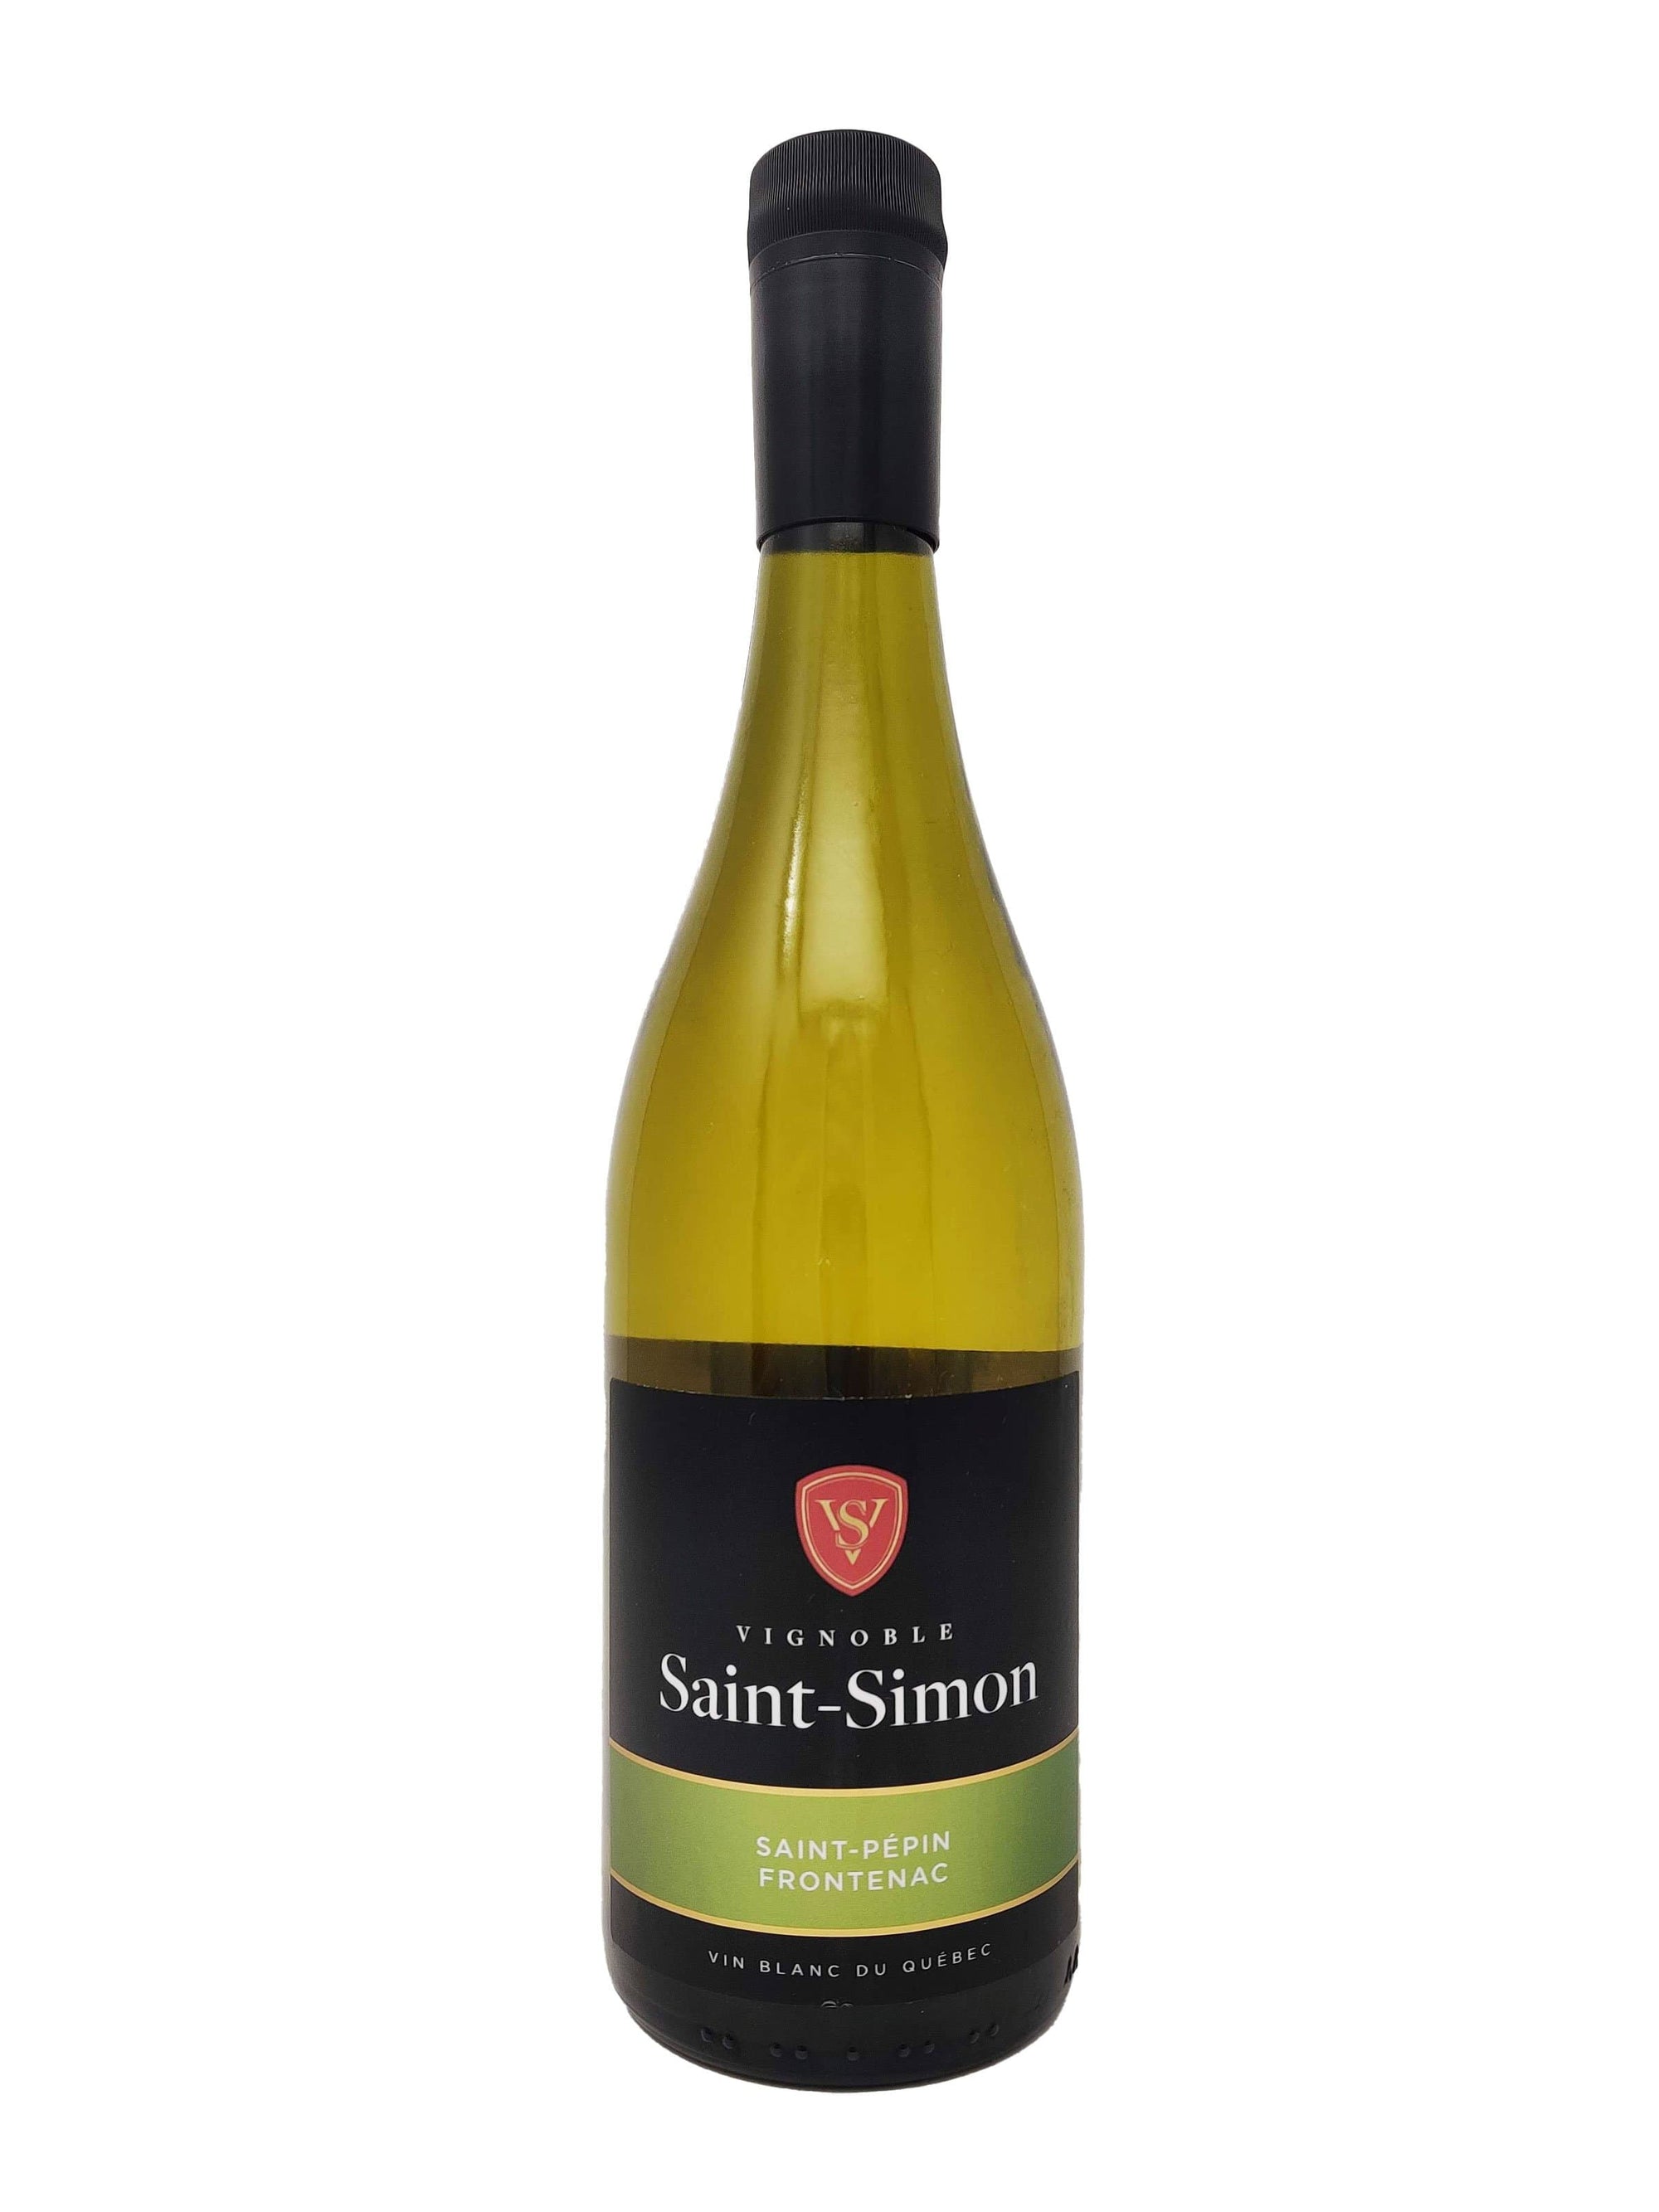 Vignoble Saint-Simon vin Frontenac Saint-Pépin - Vin blanc du Vignoble Saint-Simon